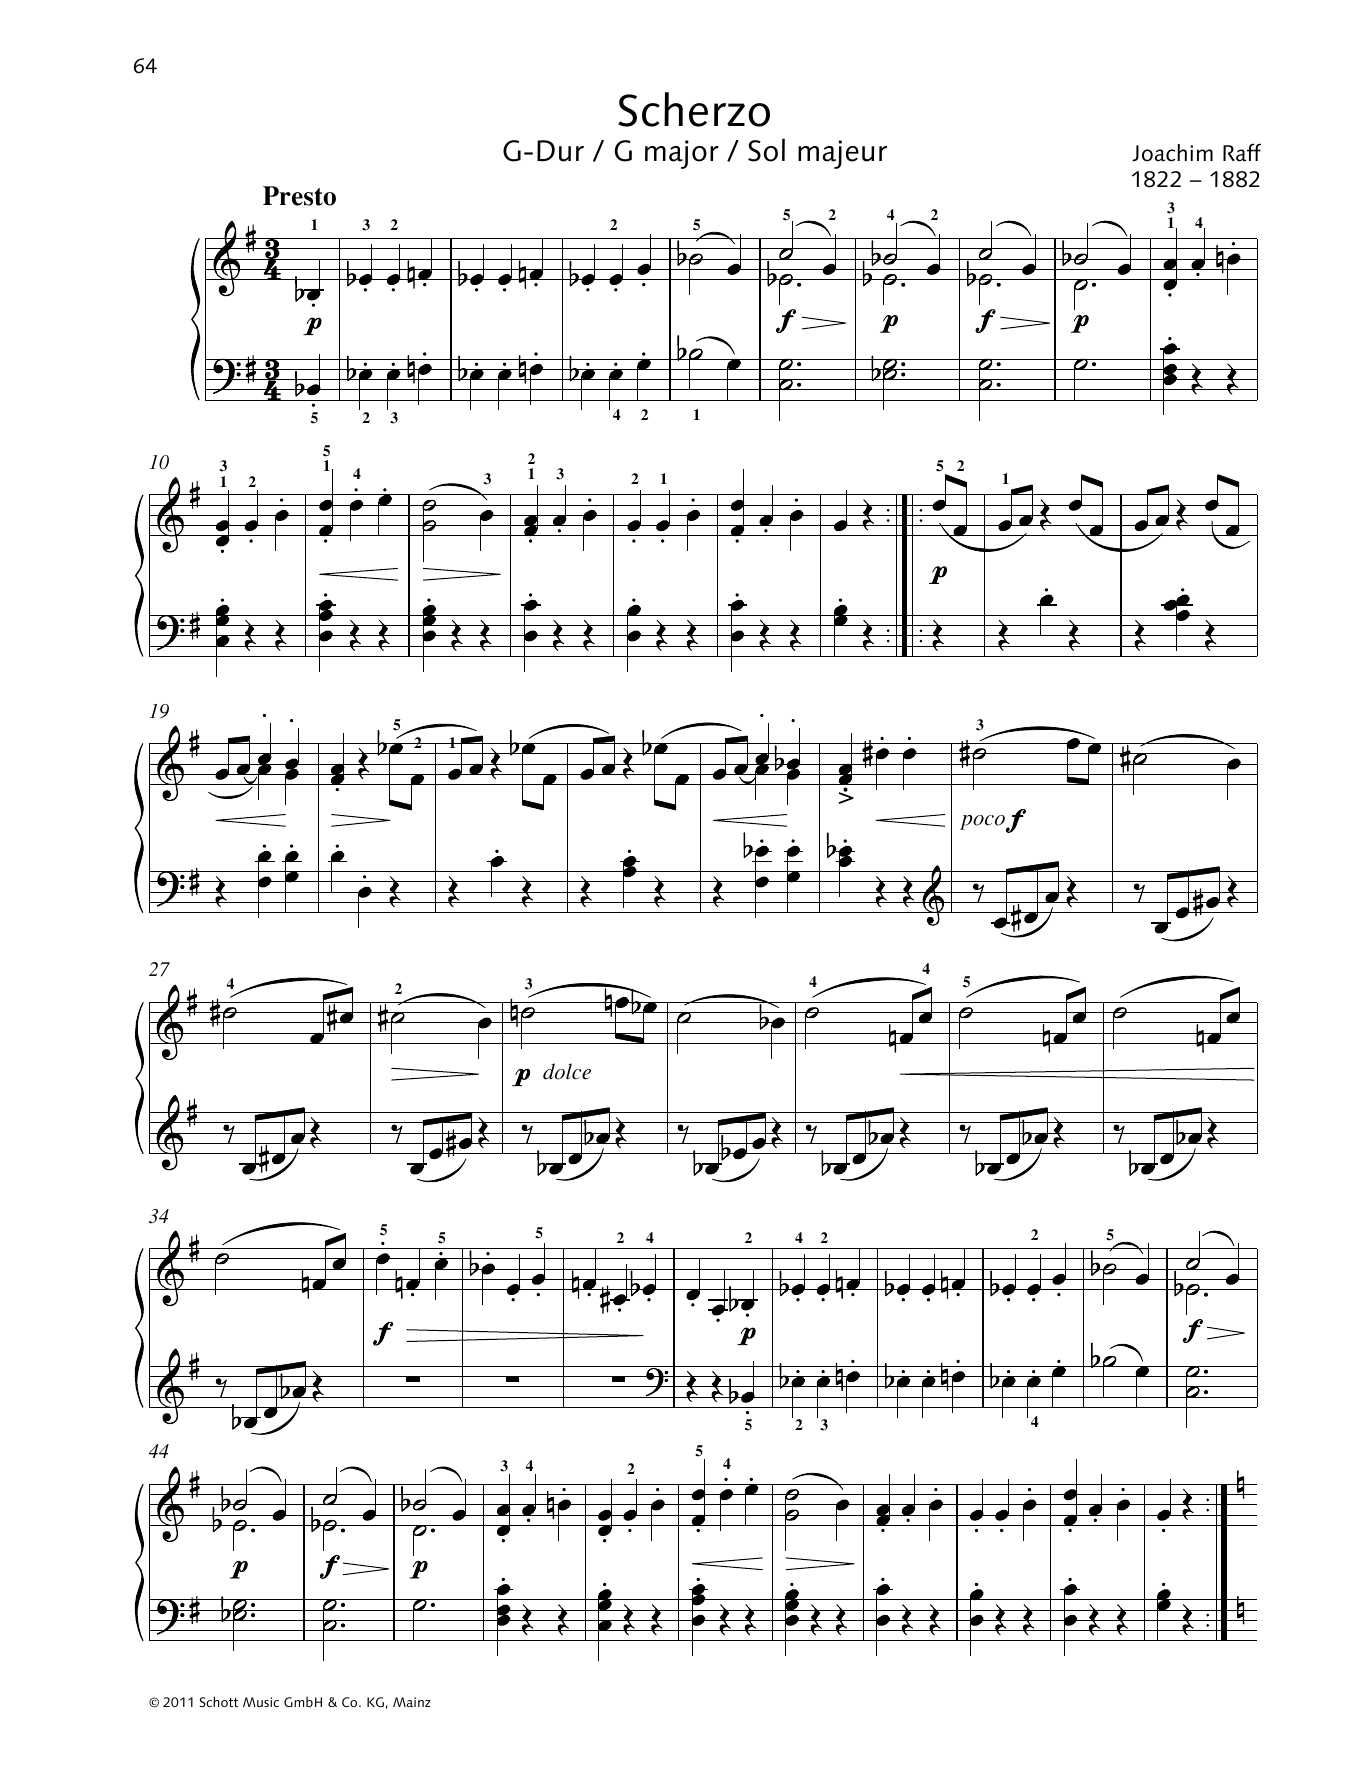 Monika Twelsiek Scherzo G major Sheet Music Notes & Chords for Piano Solo - Download or Print PDF